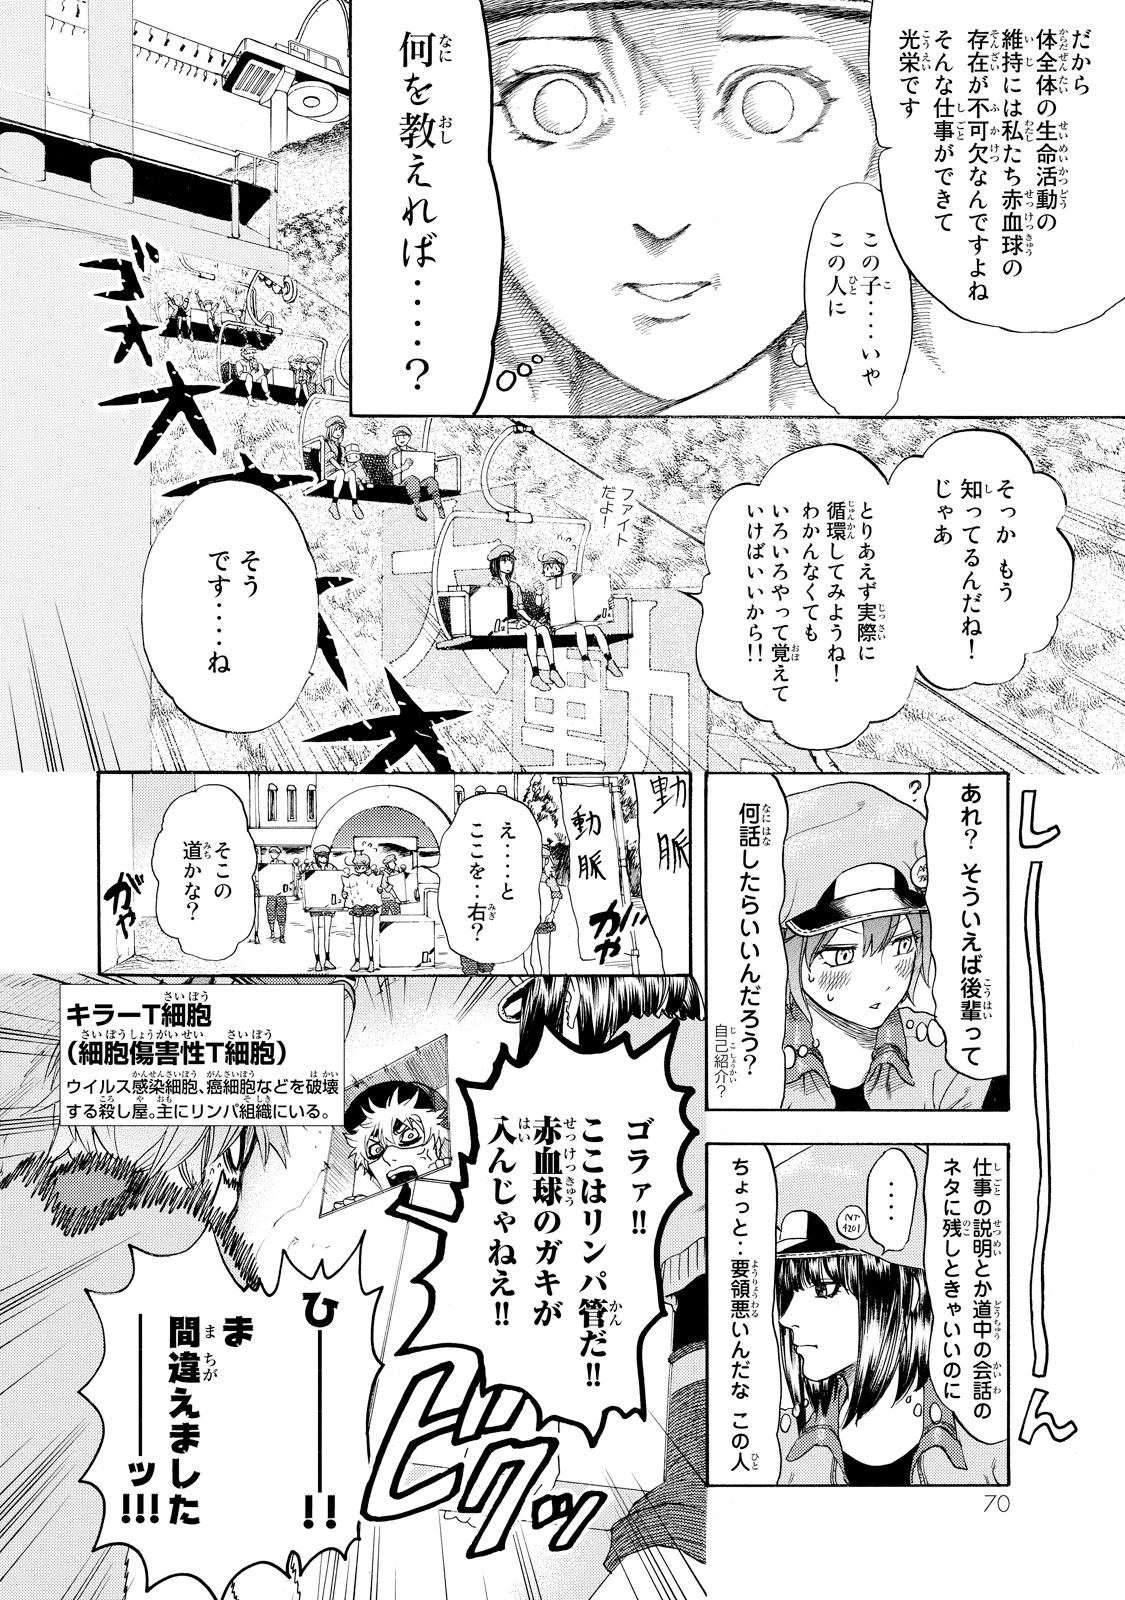 Hataraku Saibou - Chapter 17 - Page 6